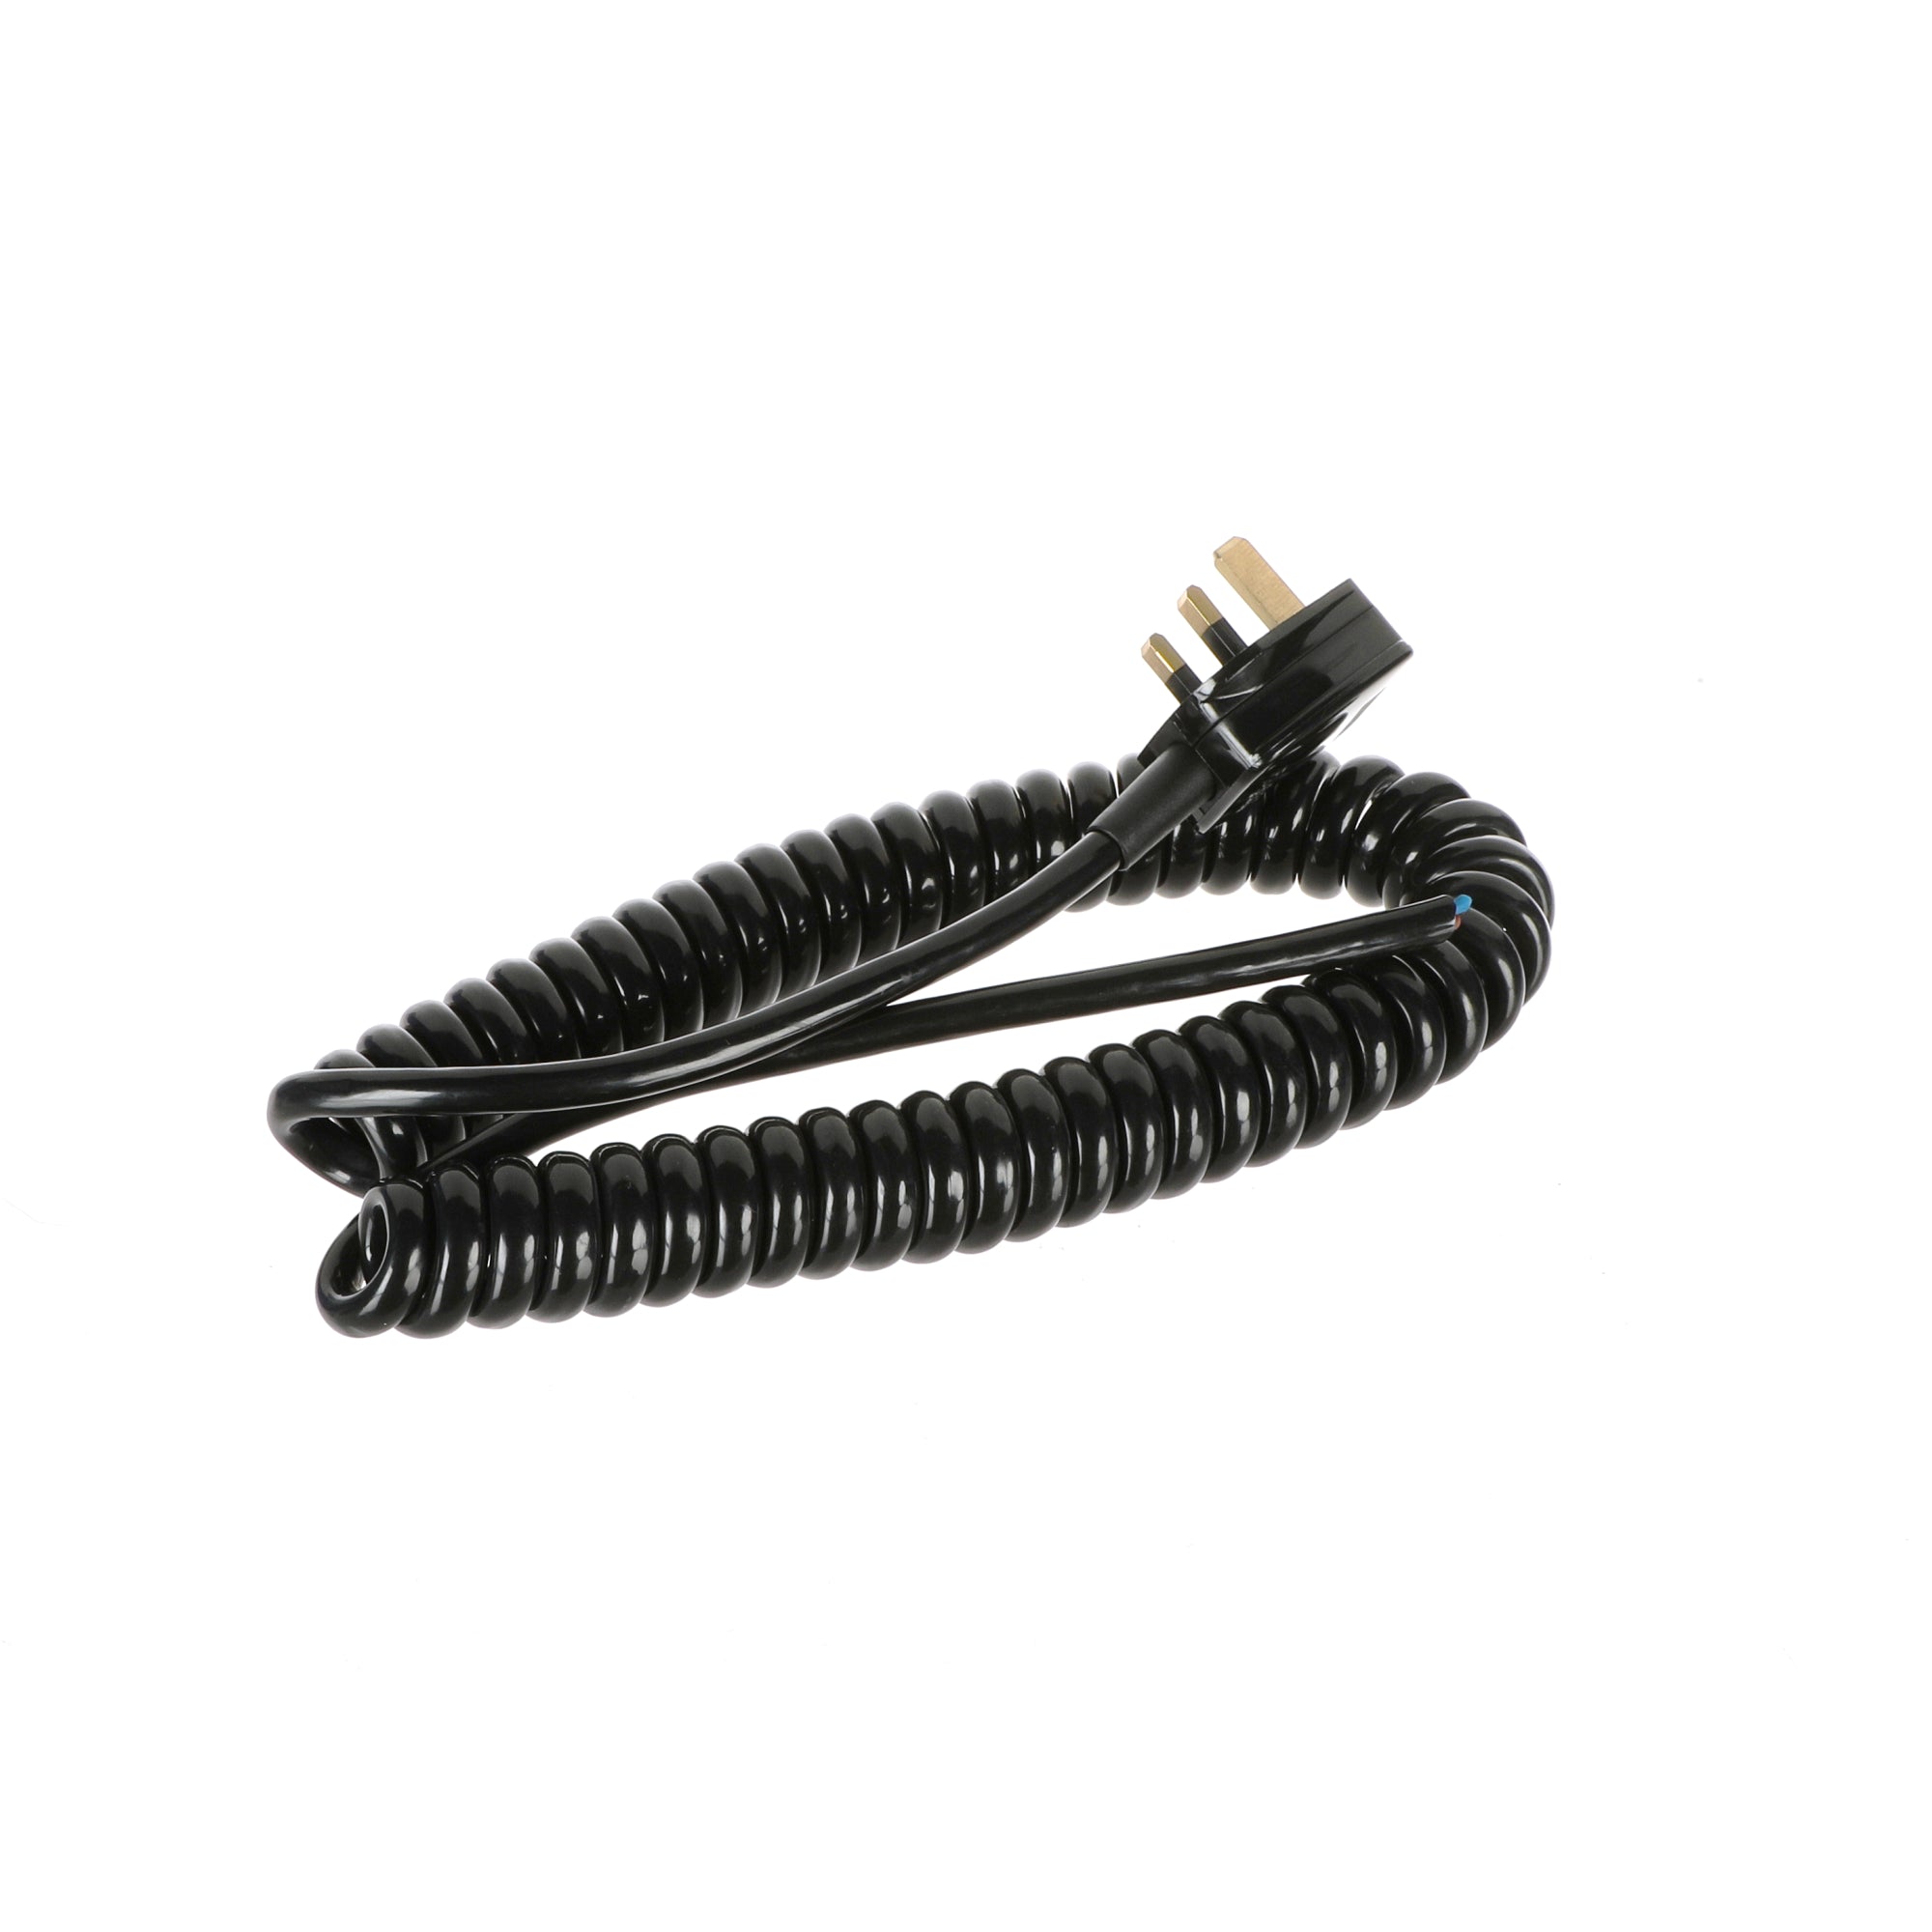 Curlyflex Main lead 3 Core 1.5m PVC Black